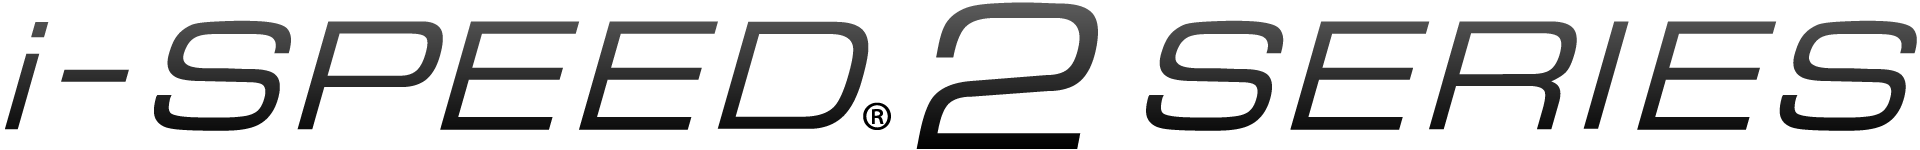 i-SPEED 2 Series gradient logo.